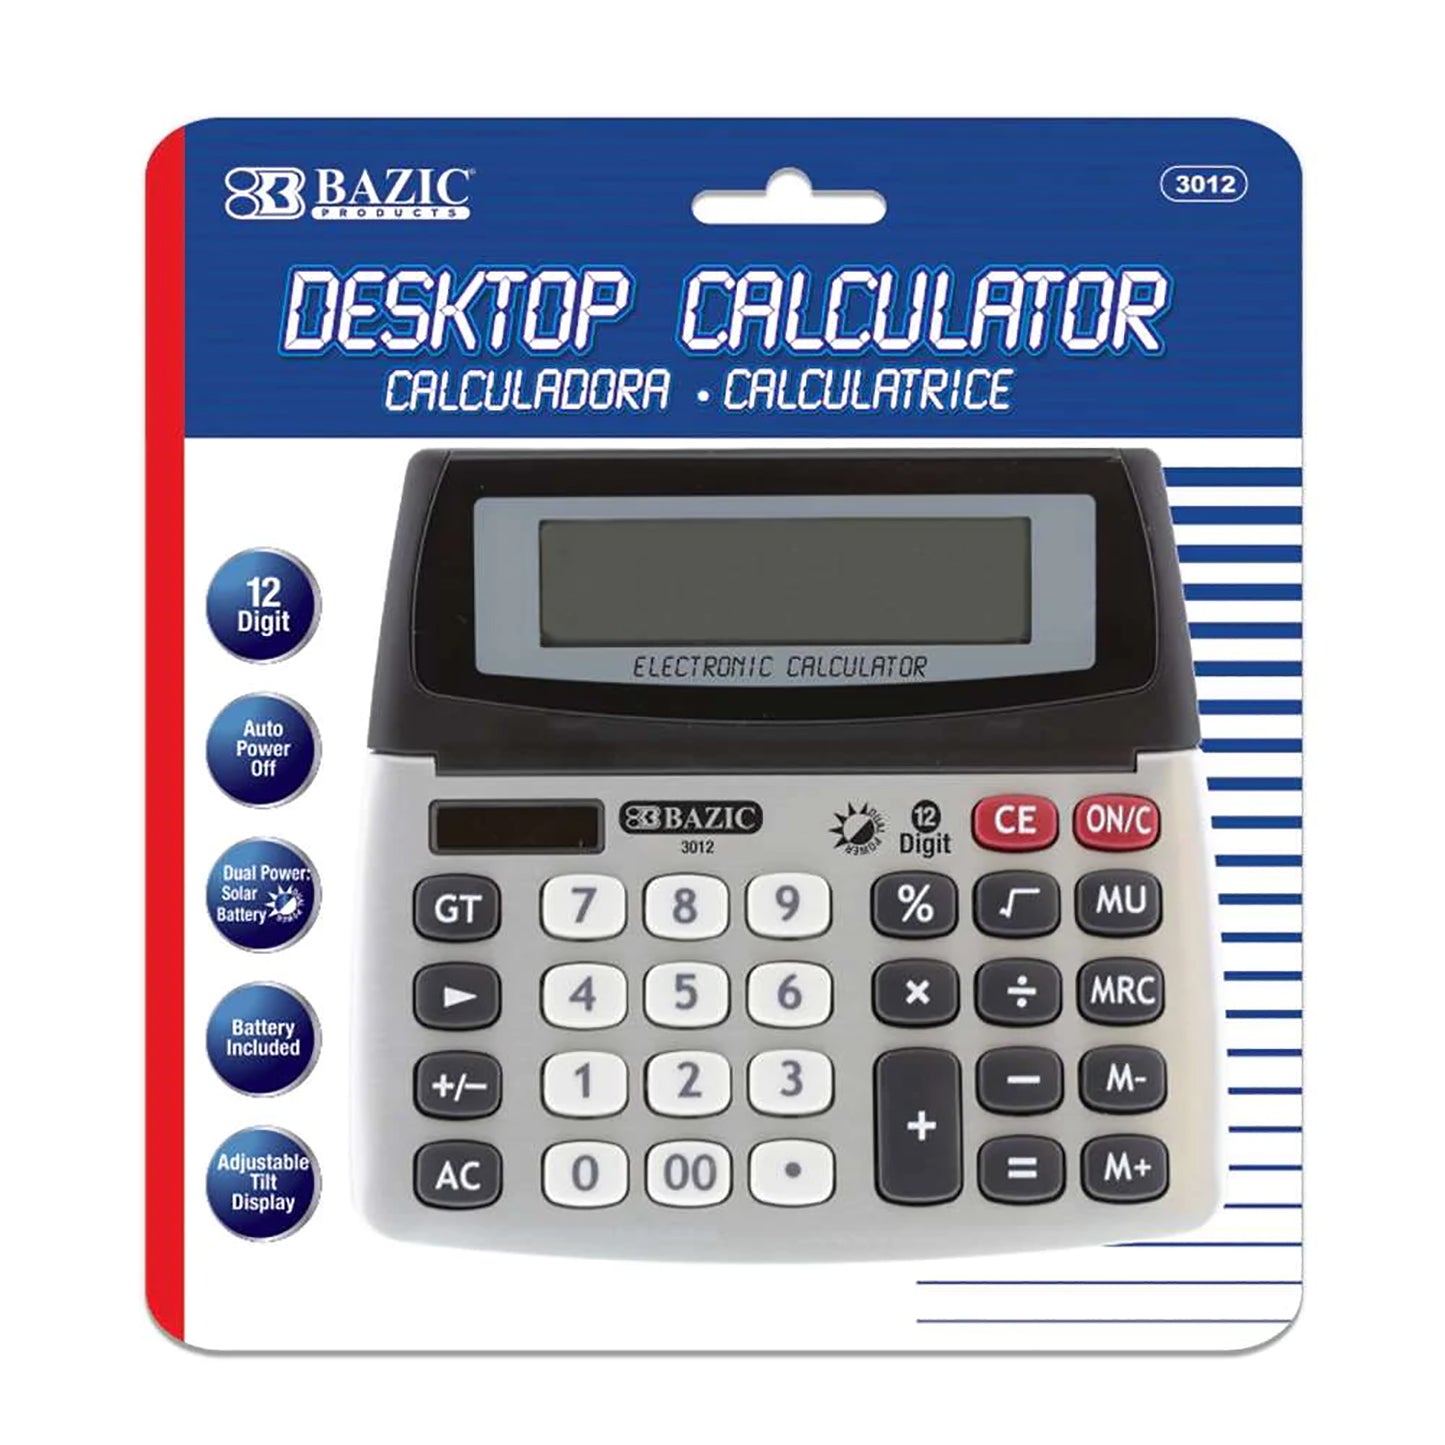 12-Digit Dual Power Desktop Calculator with Adjustable Display, Pack of 2